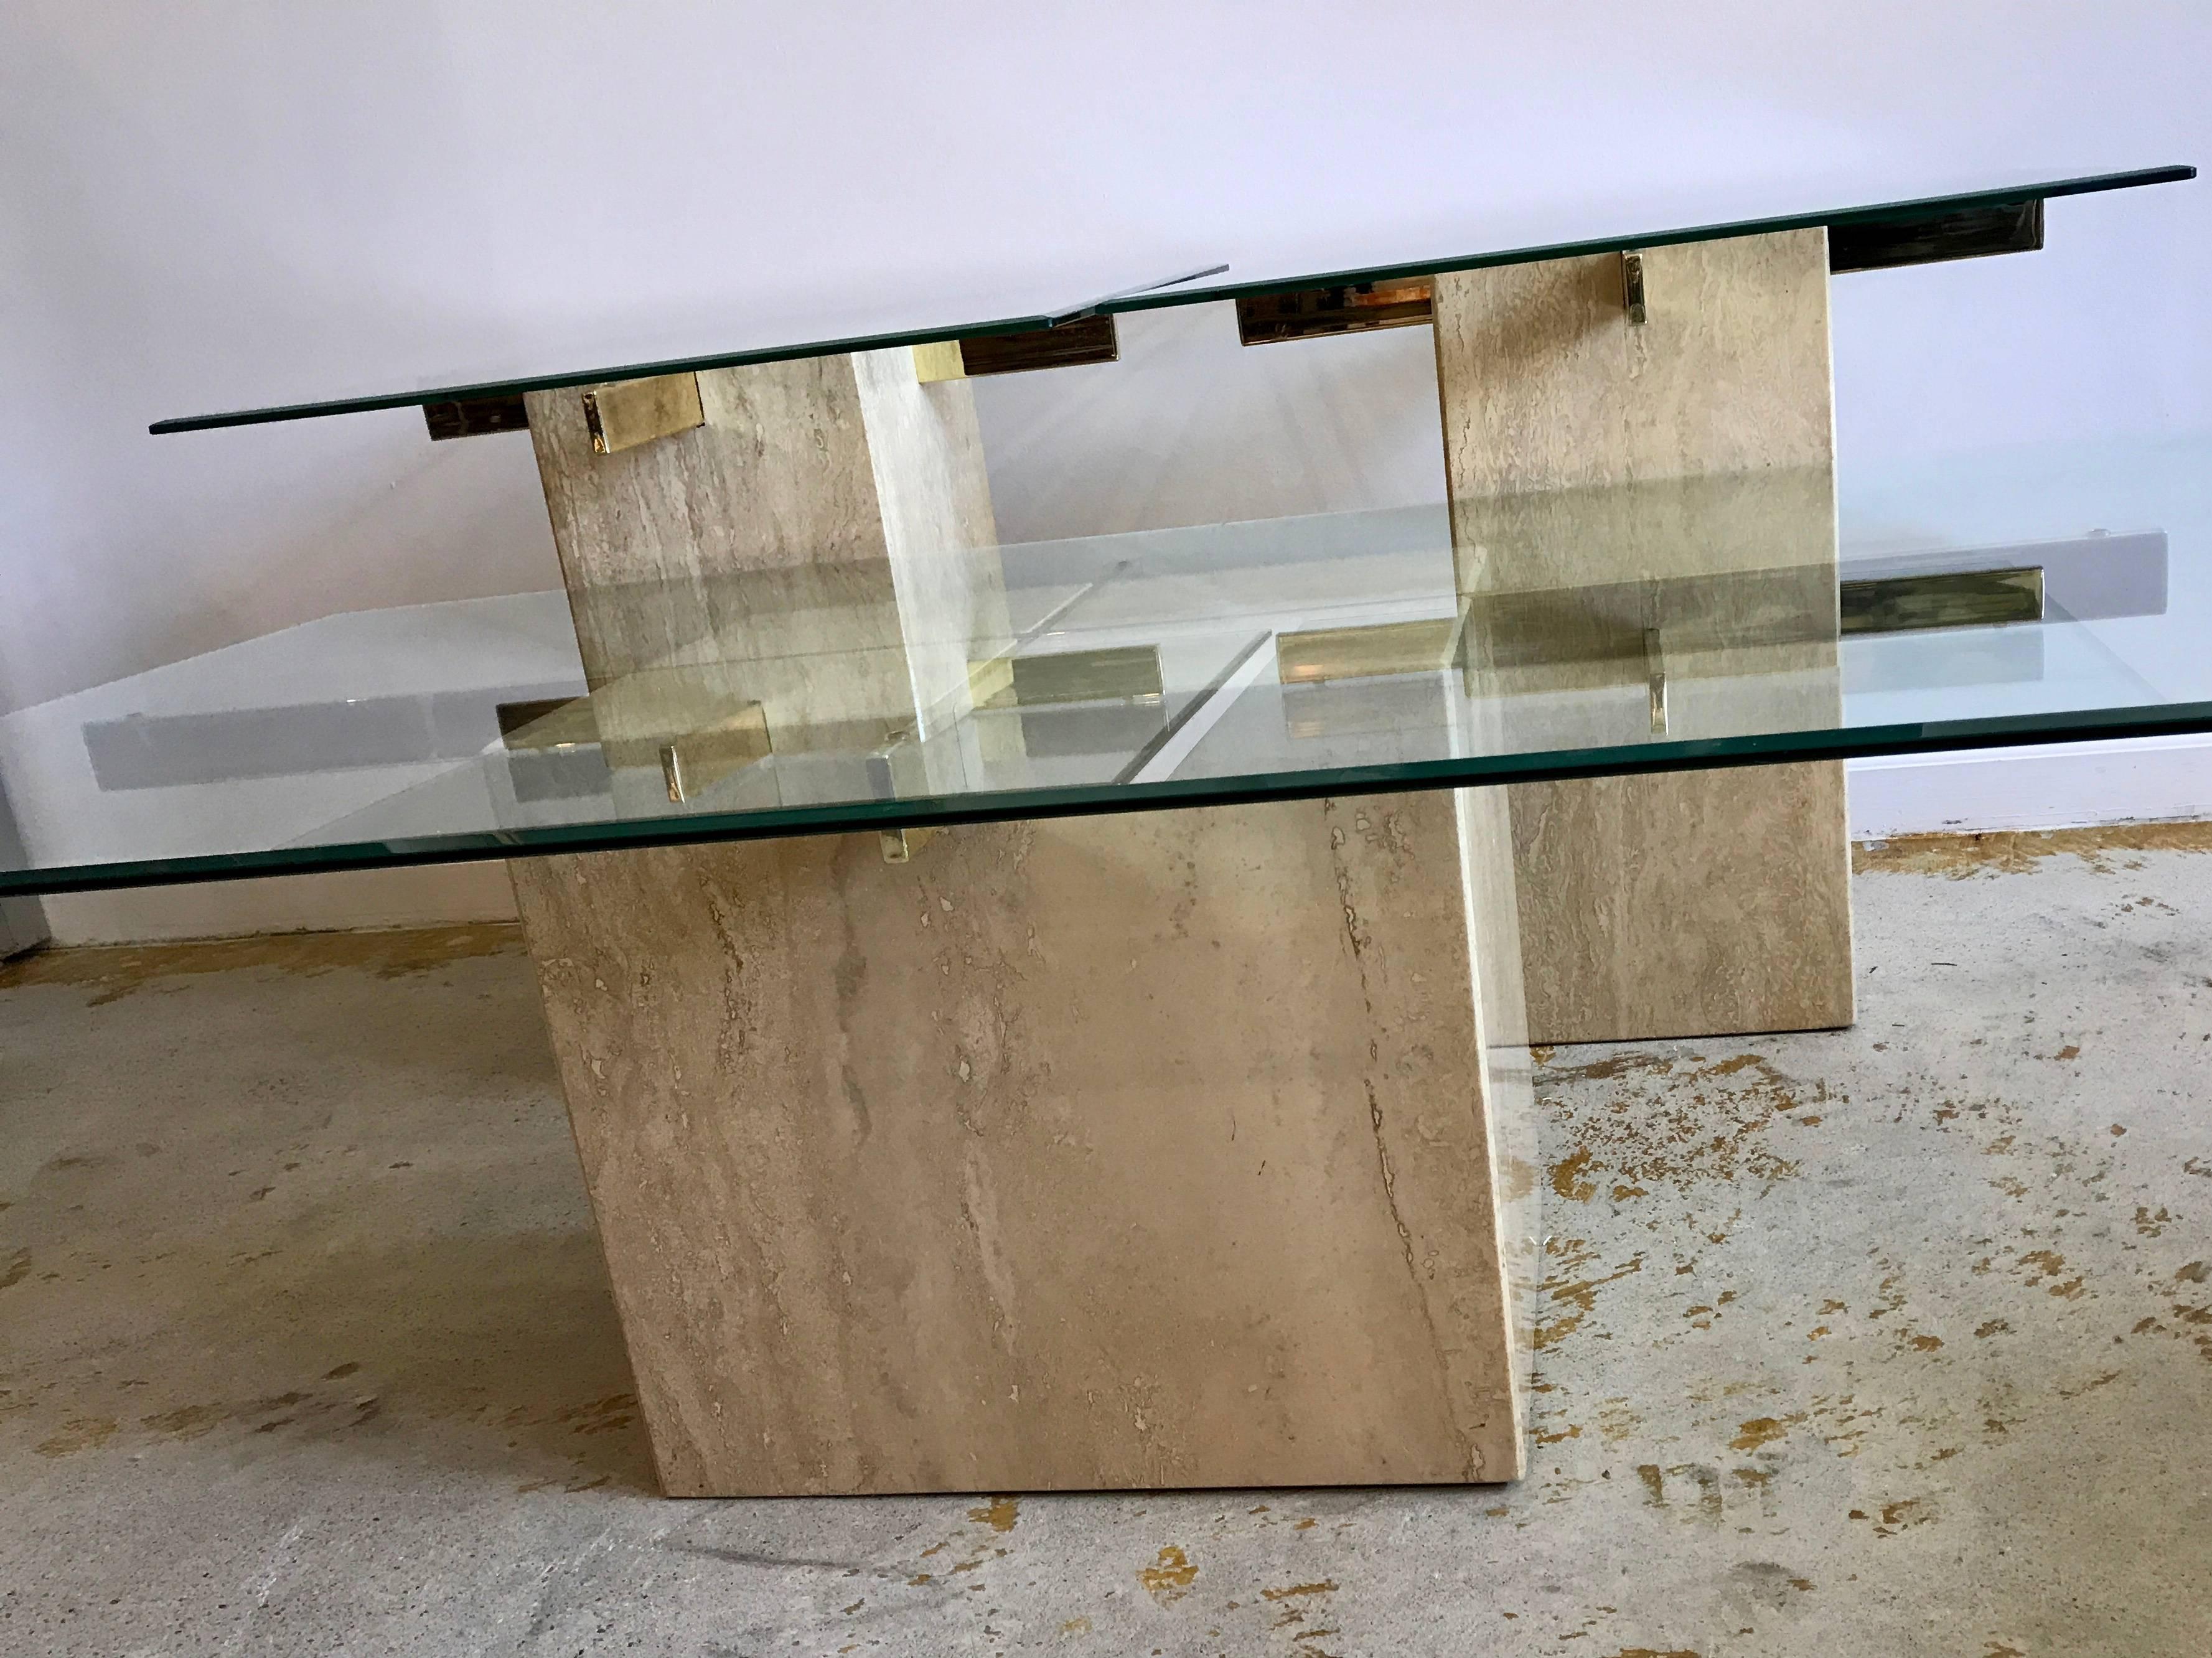 travertine glass coffee table